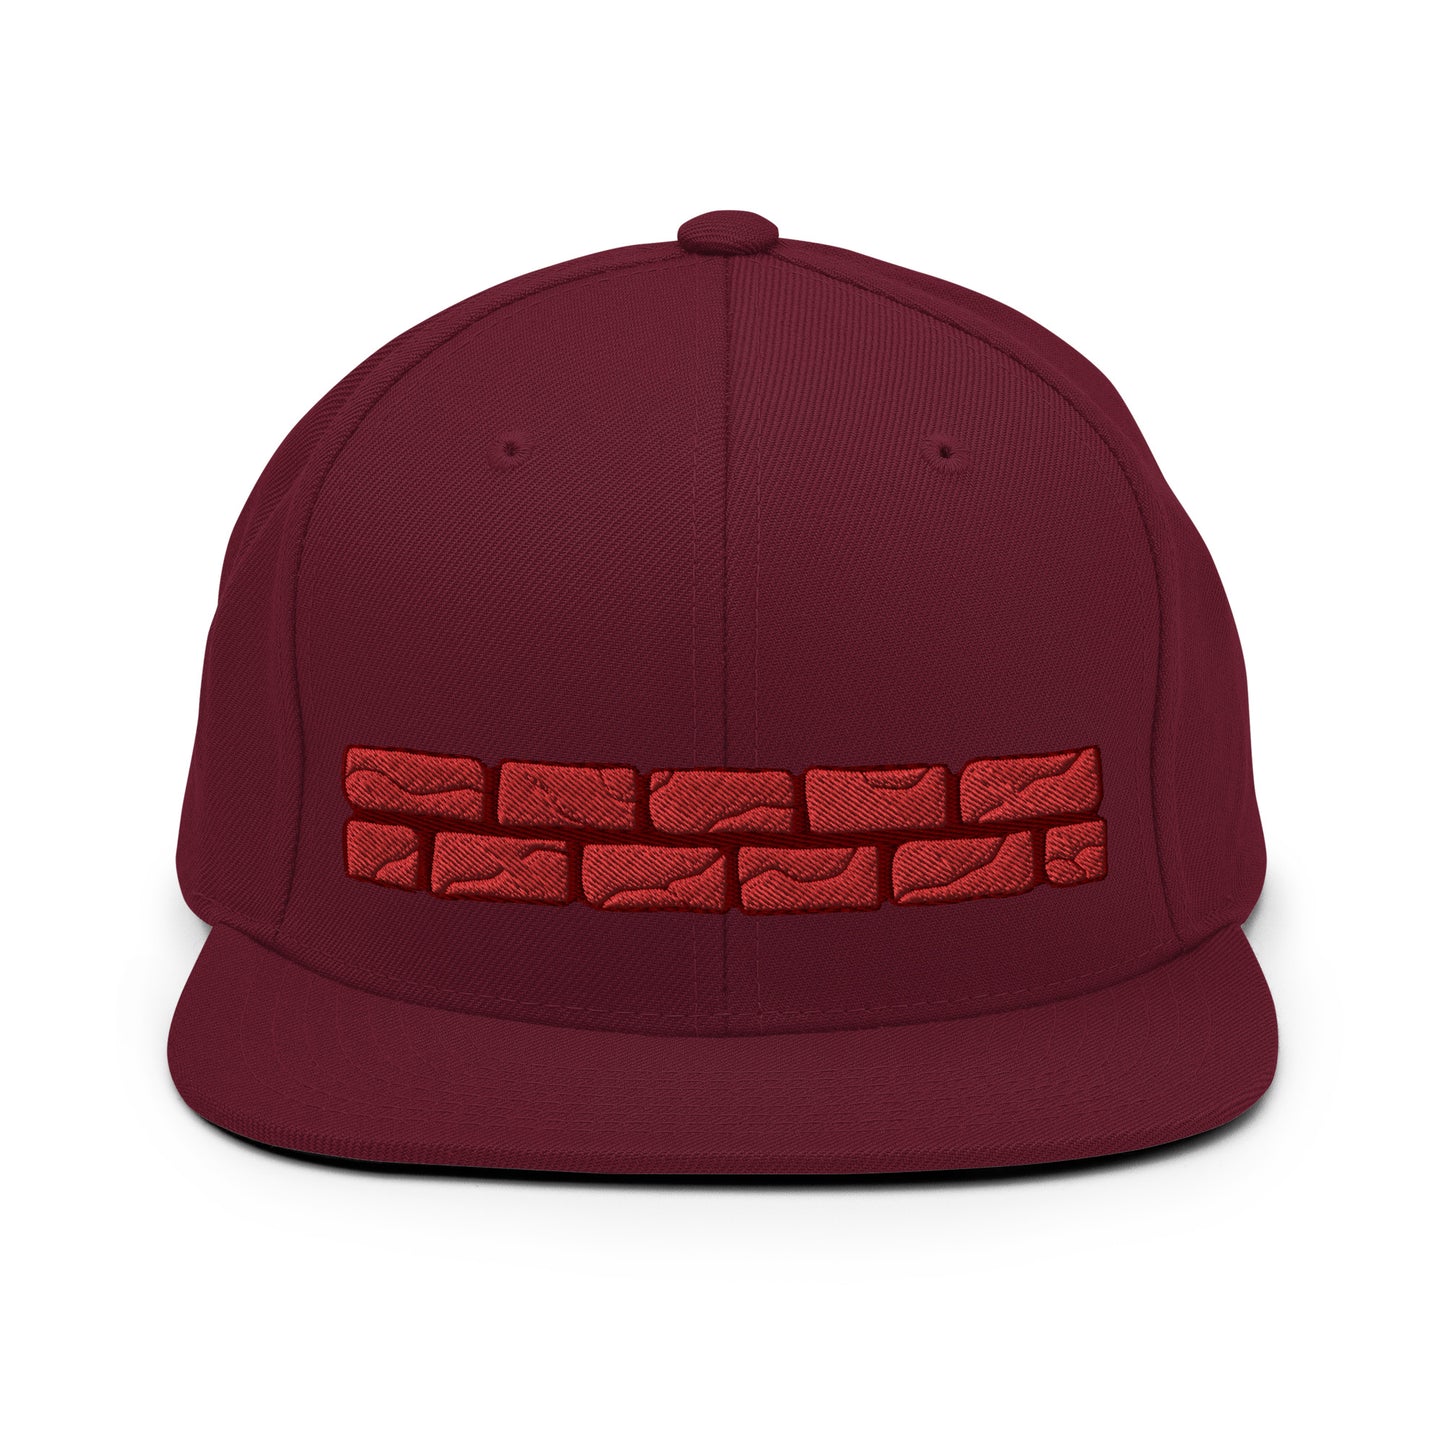 Brick Wall Peeker snapback hat